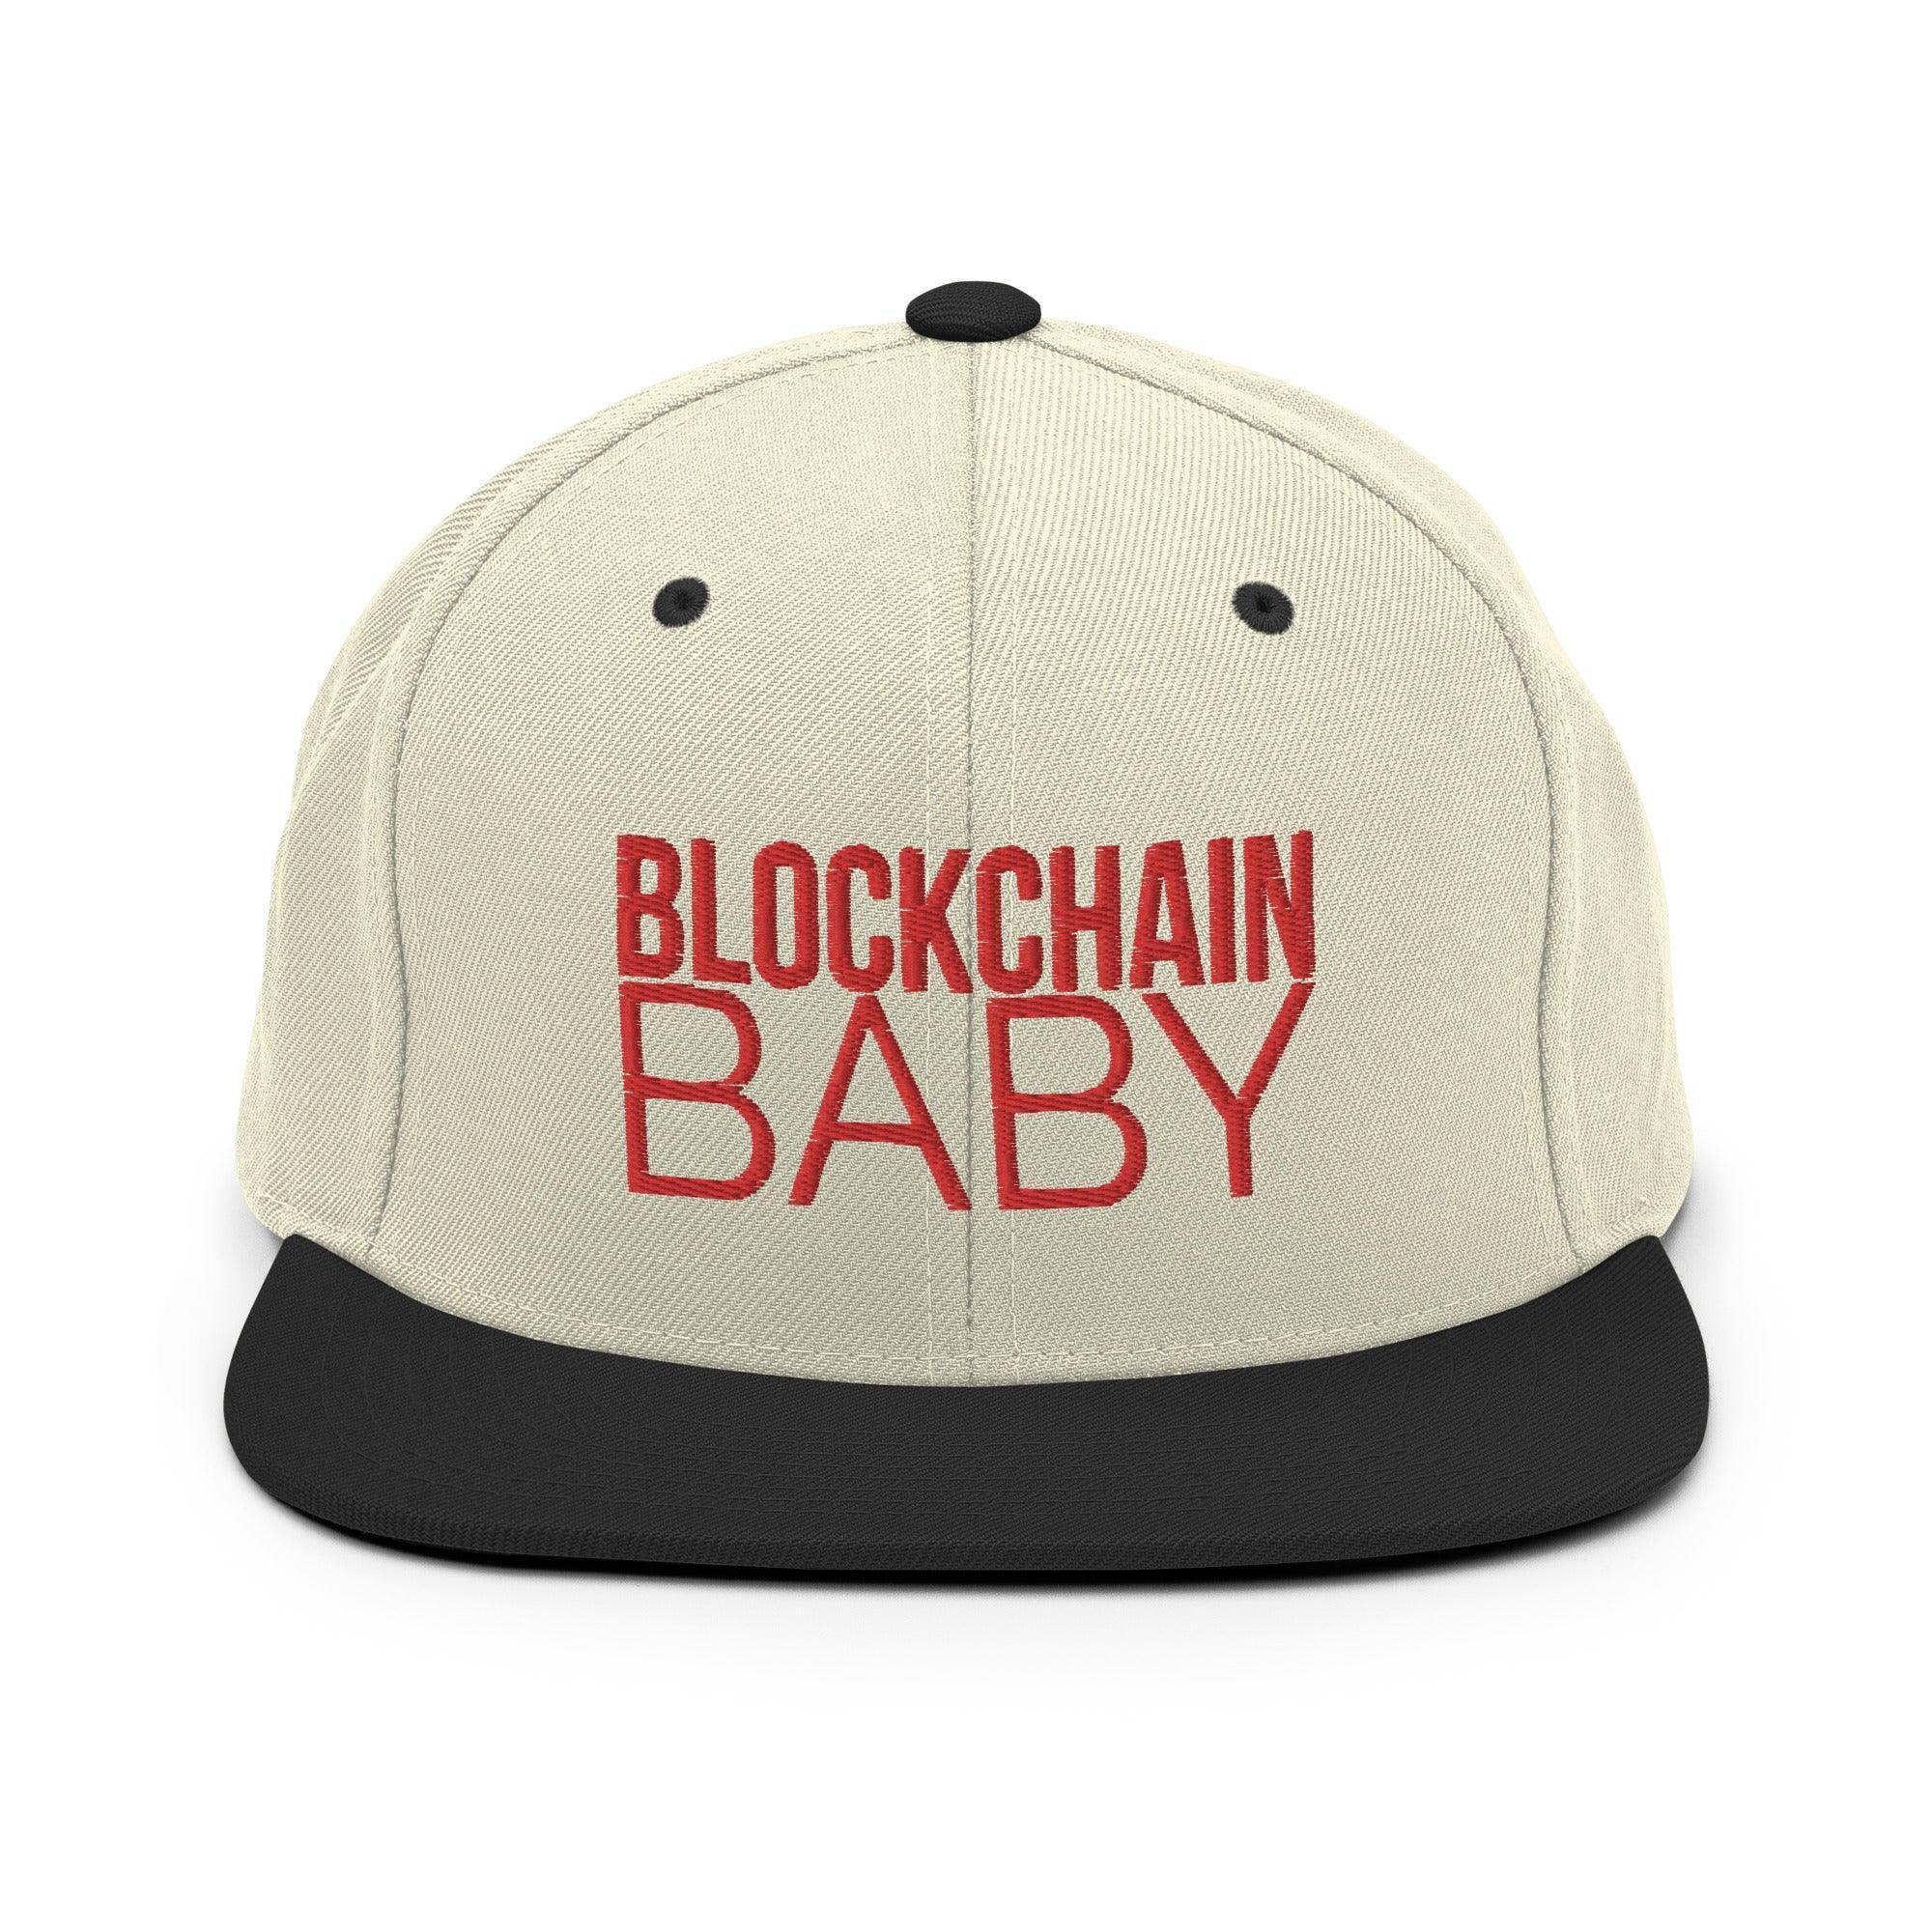 Blockchain Baby Snapback Hat - InvestmenTees